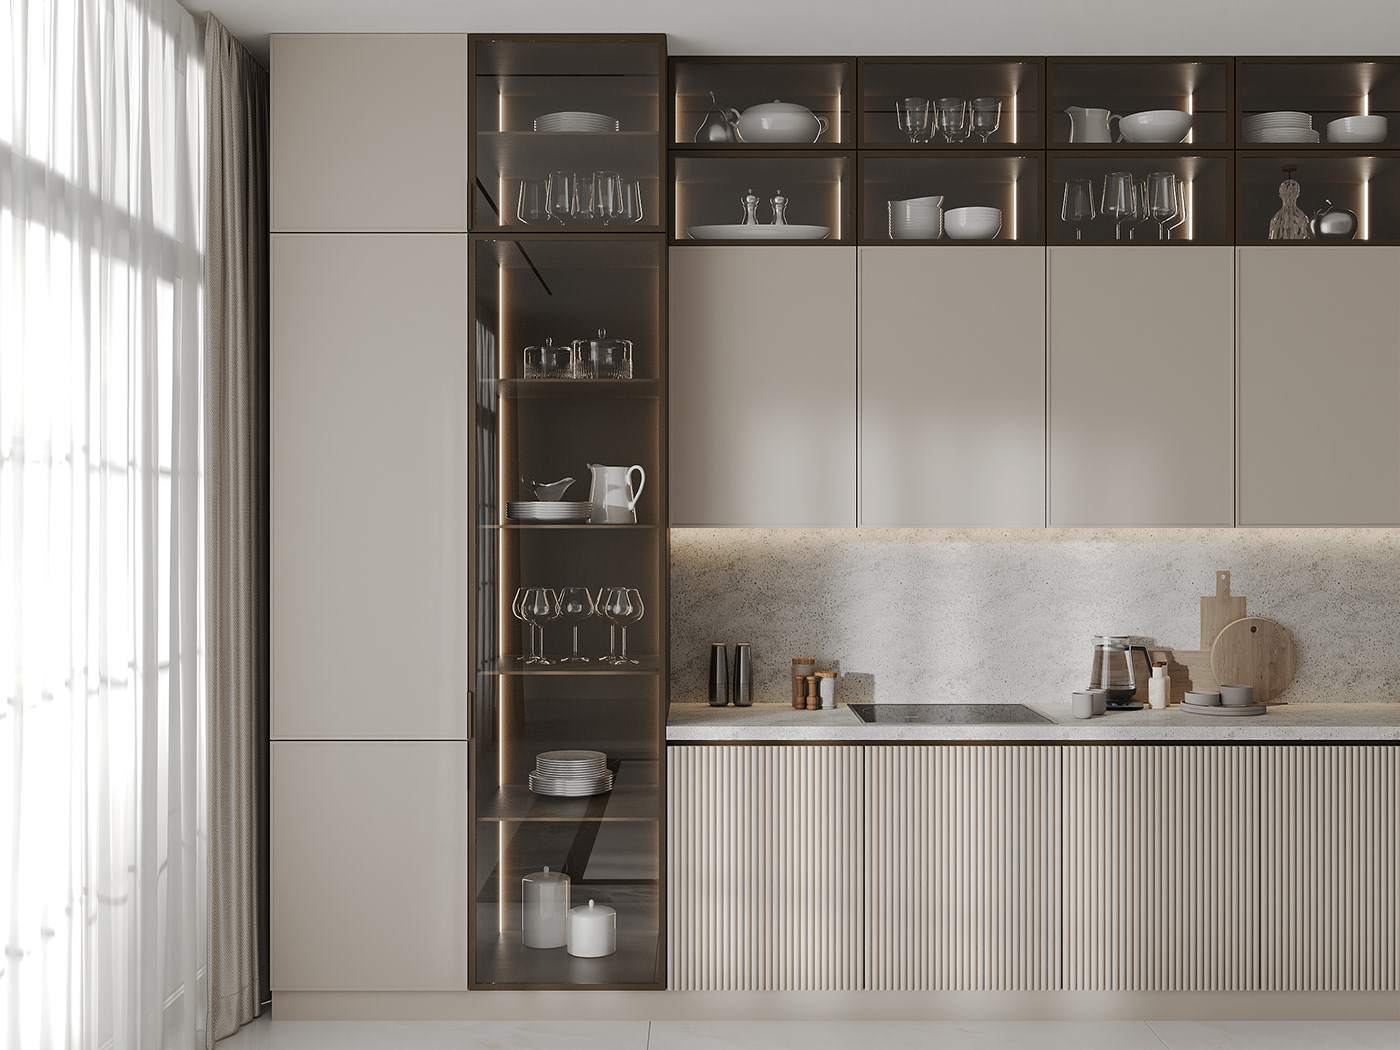 3ds max corona render  CGI 3D visualization Render interior design  modelling kitchen